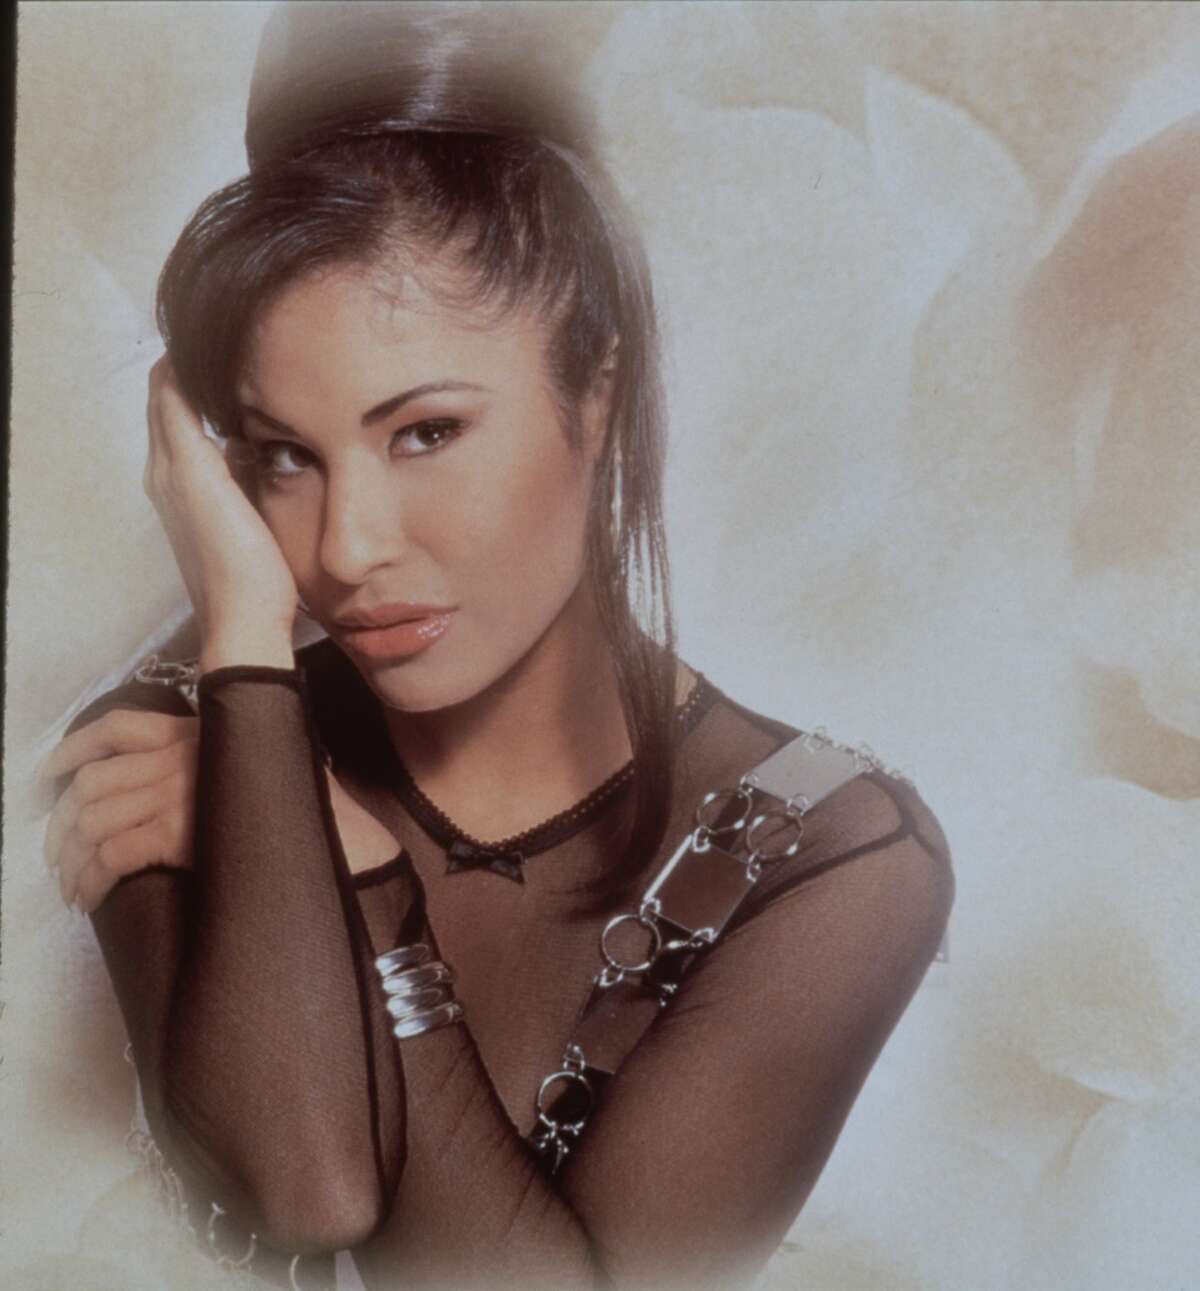 Selena Forever: Iconic photos of the Tejano star Selena Quintanilla Pérez.